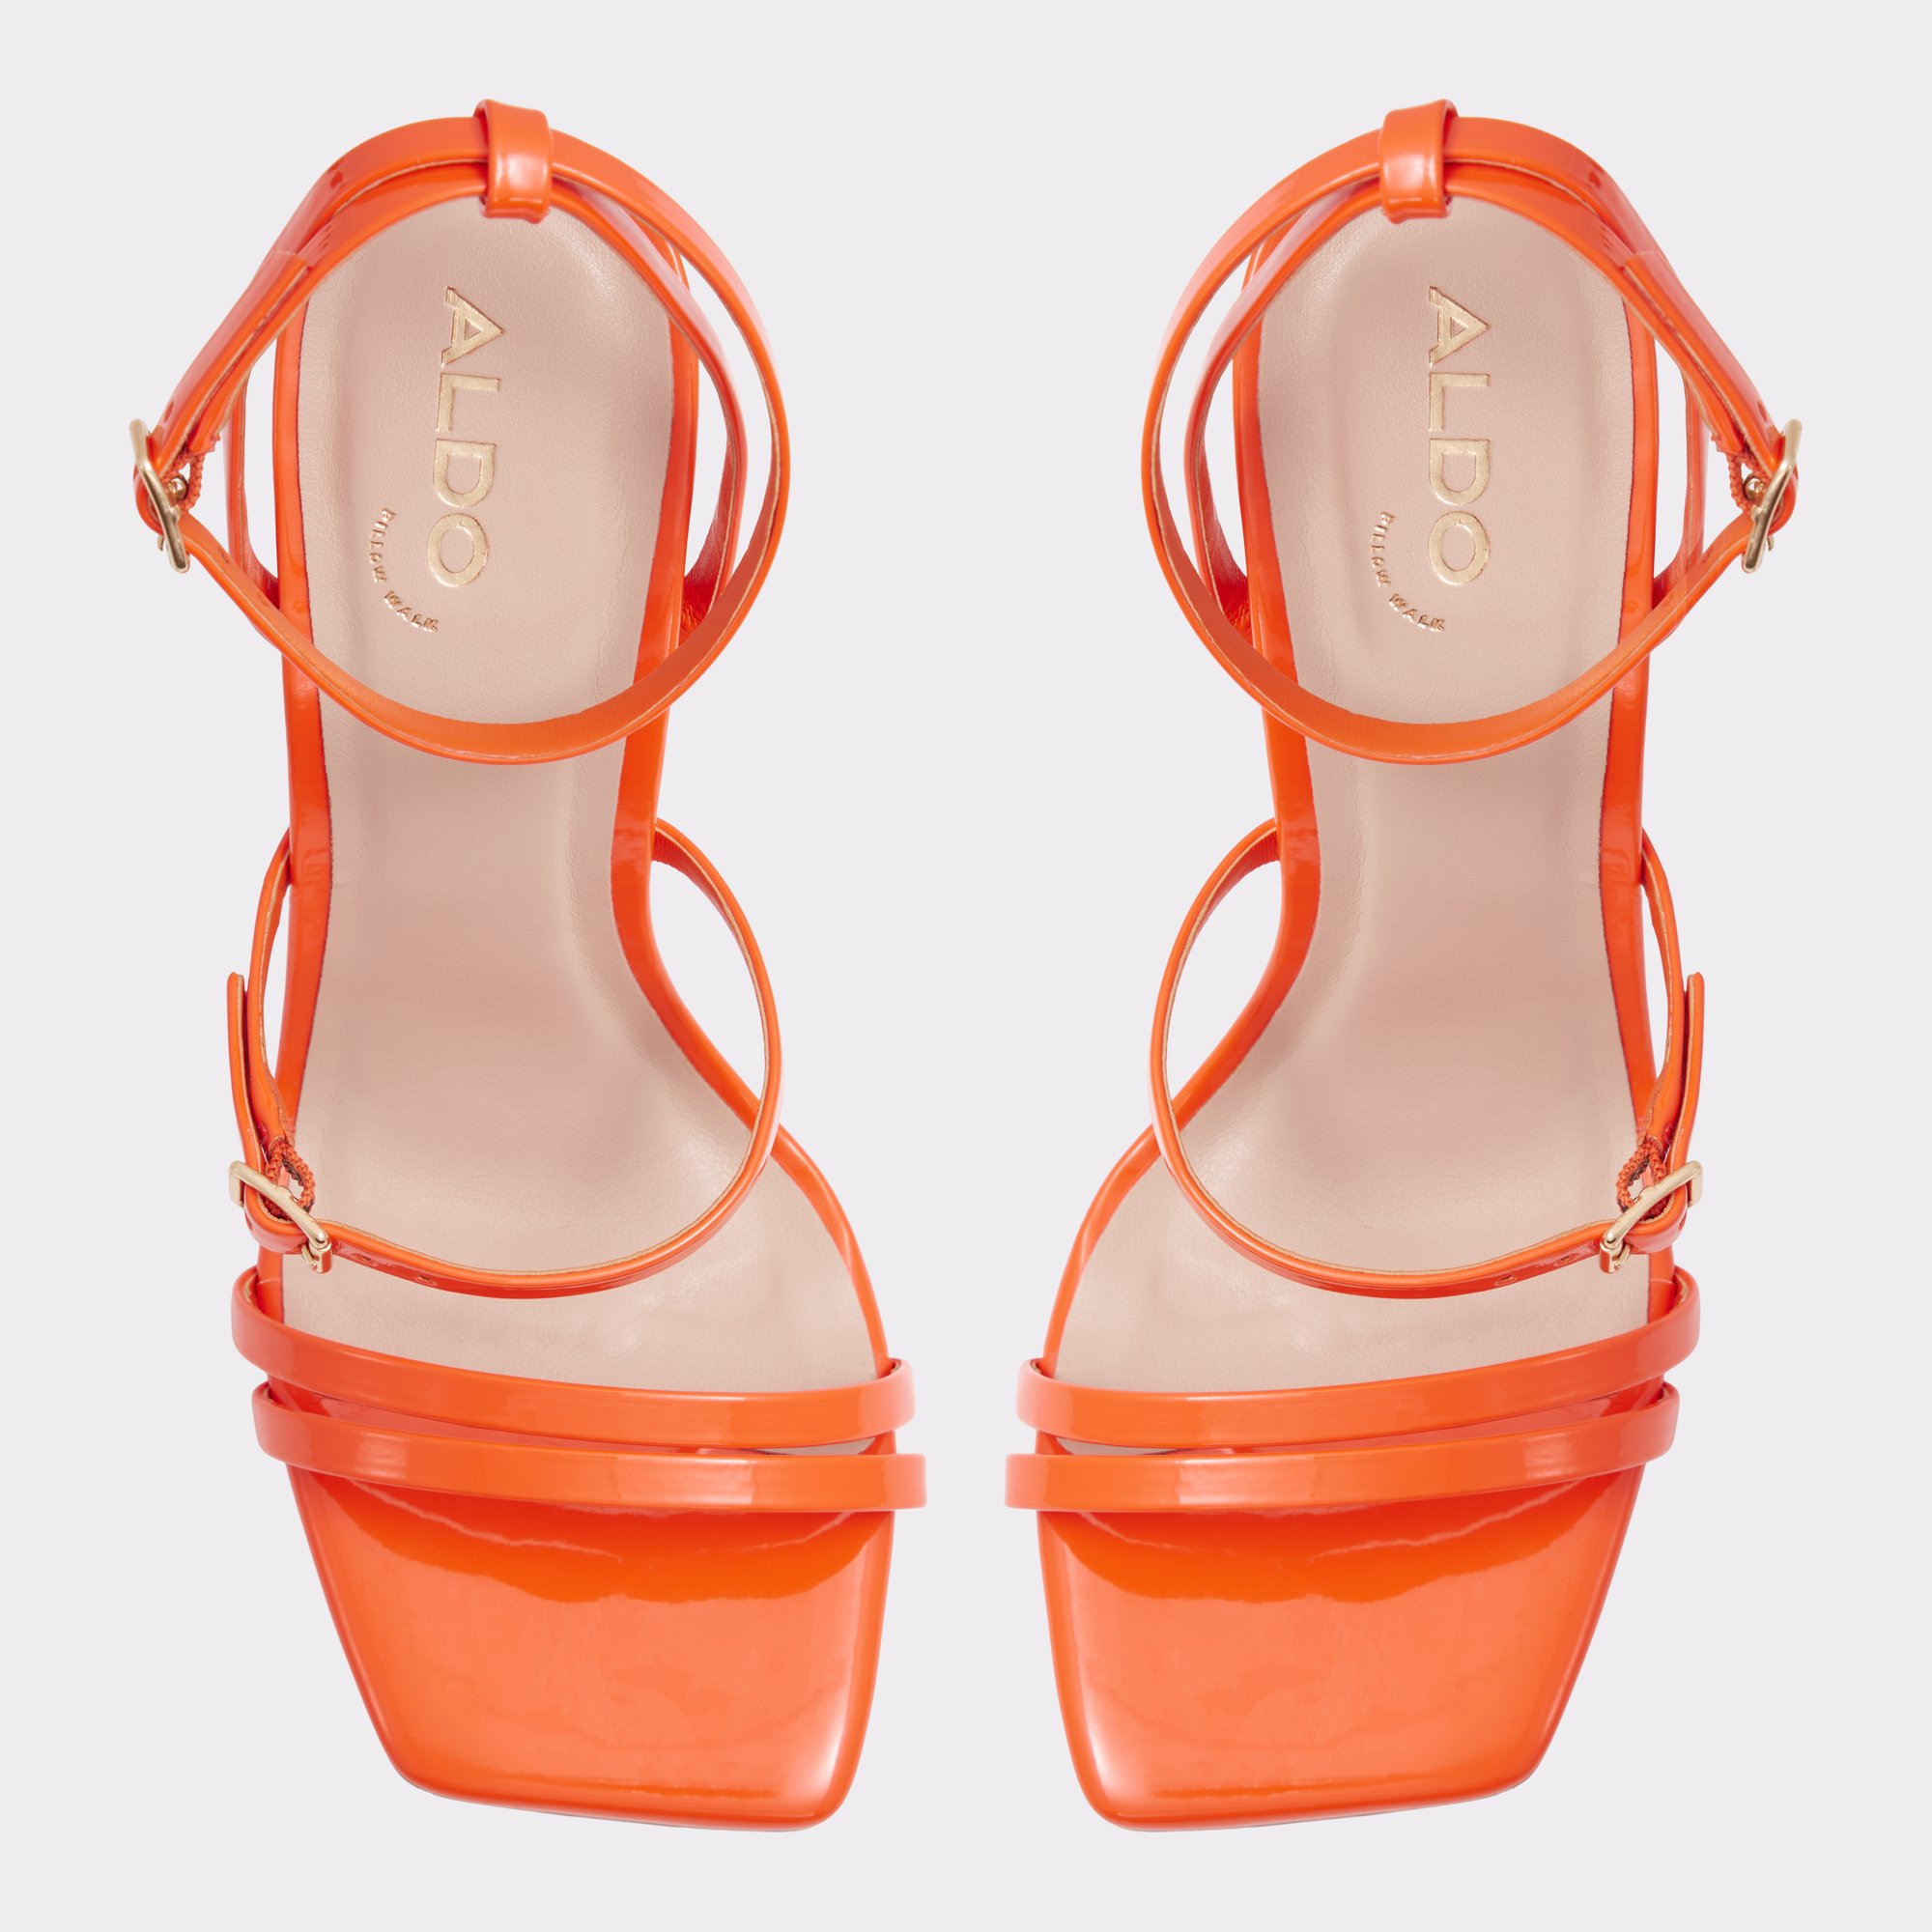 Rostyn Bright Orange Women's Strappy sandals | ALDO US